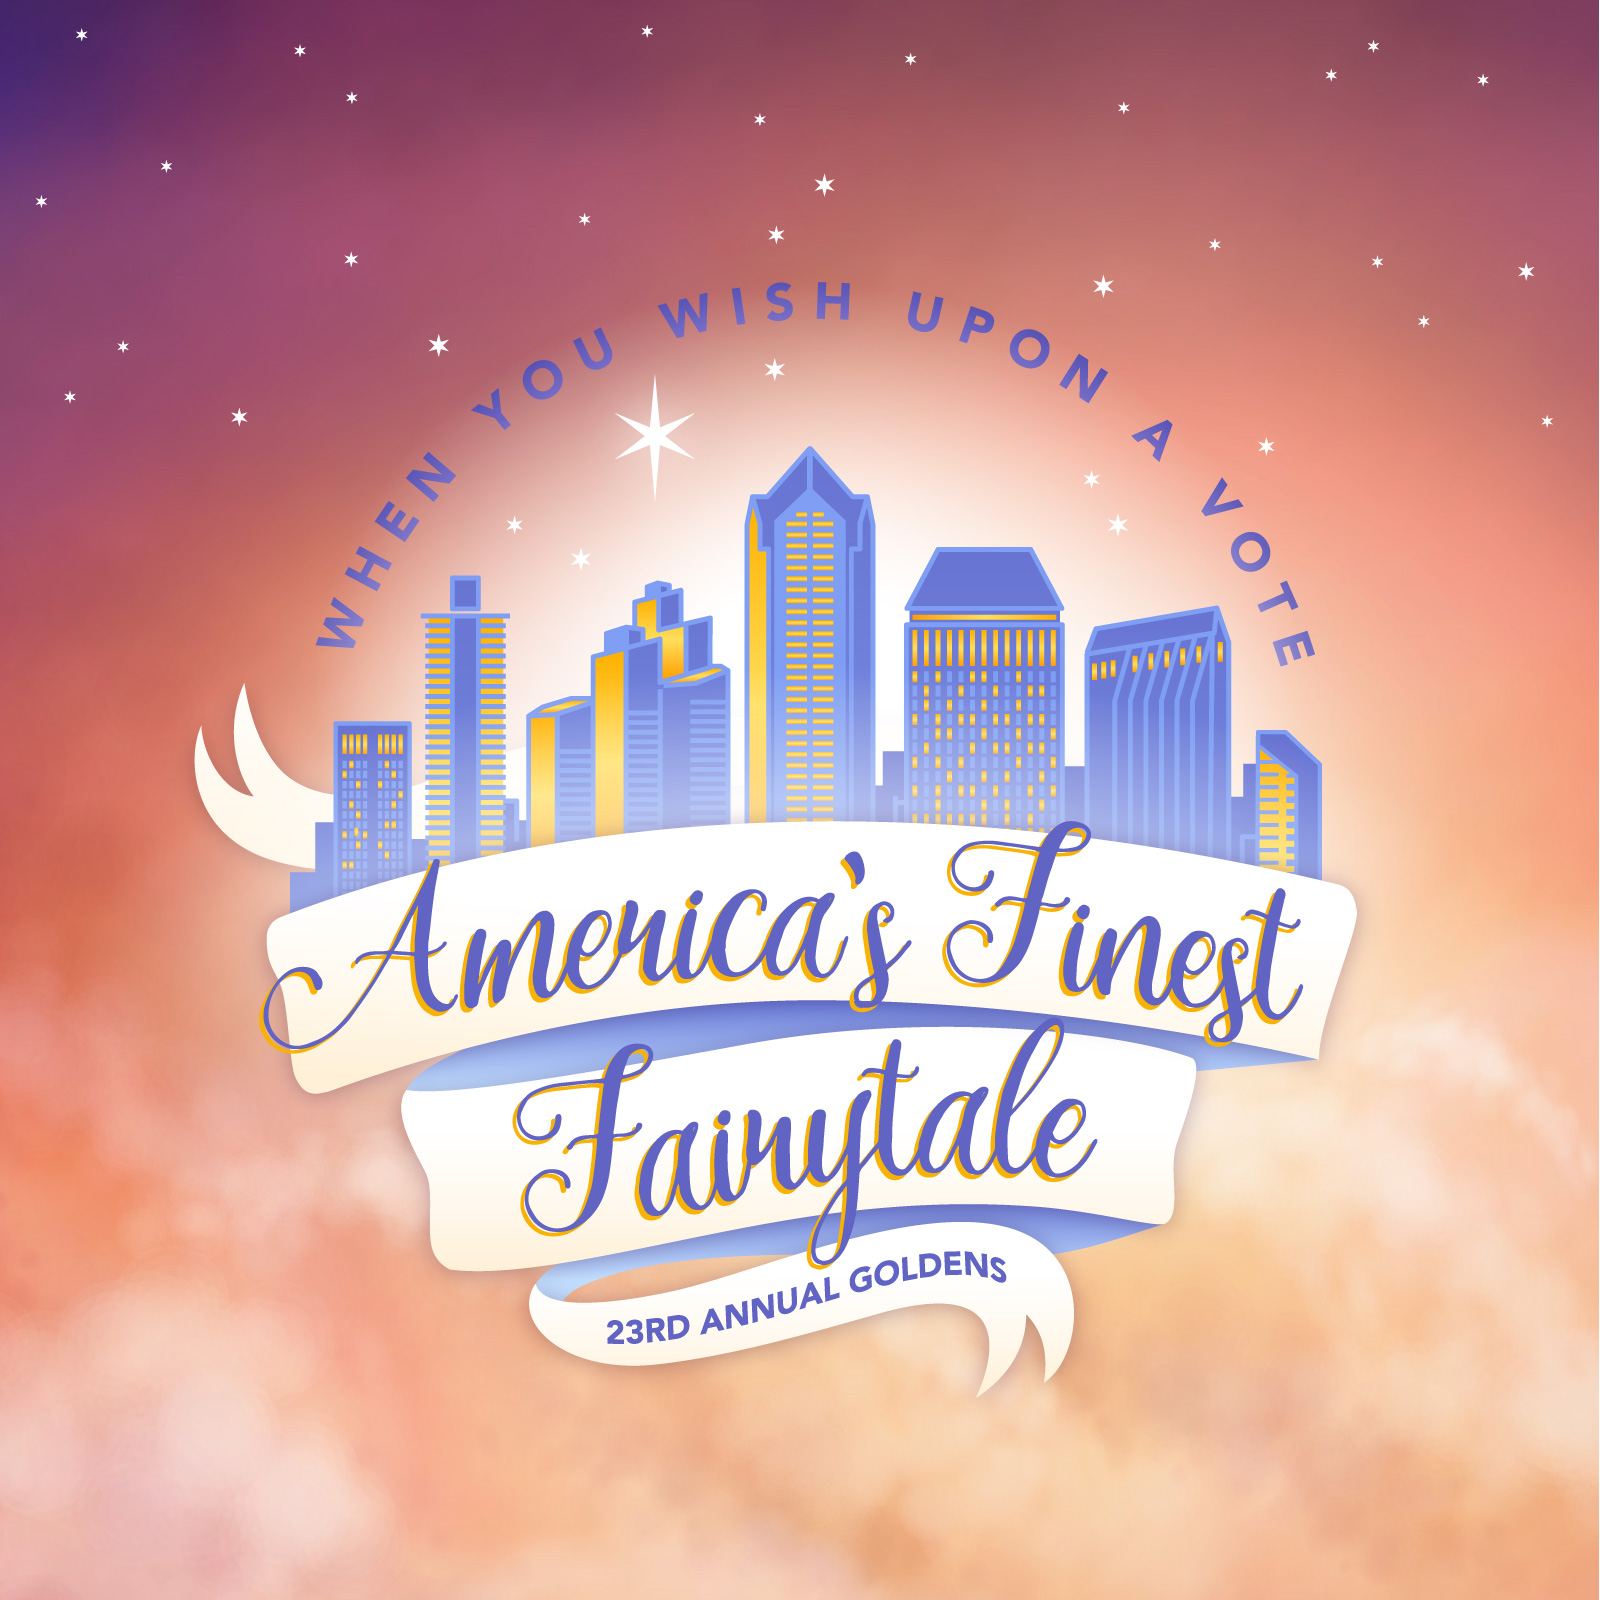 America's Finest Fairytale logo designed by Ashley Lewis